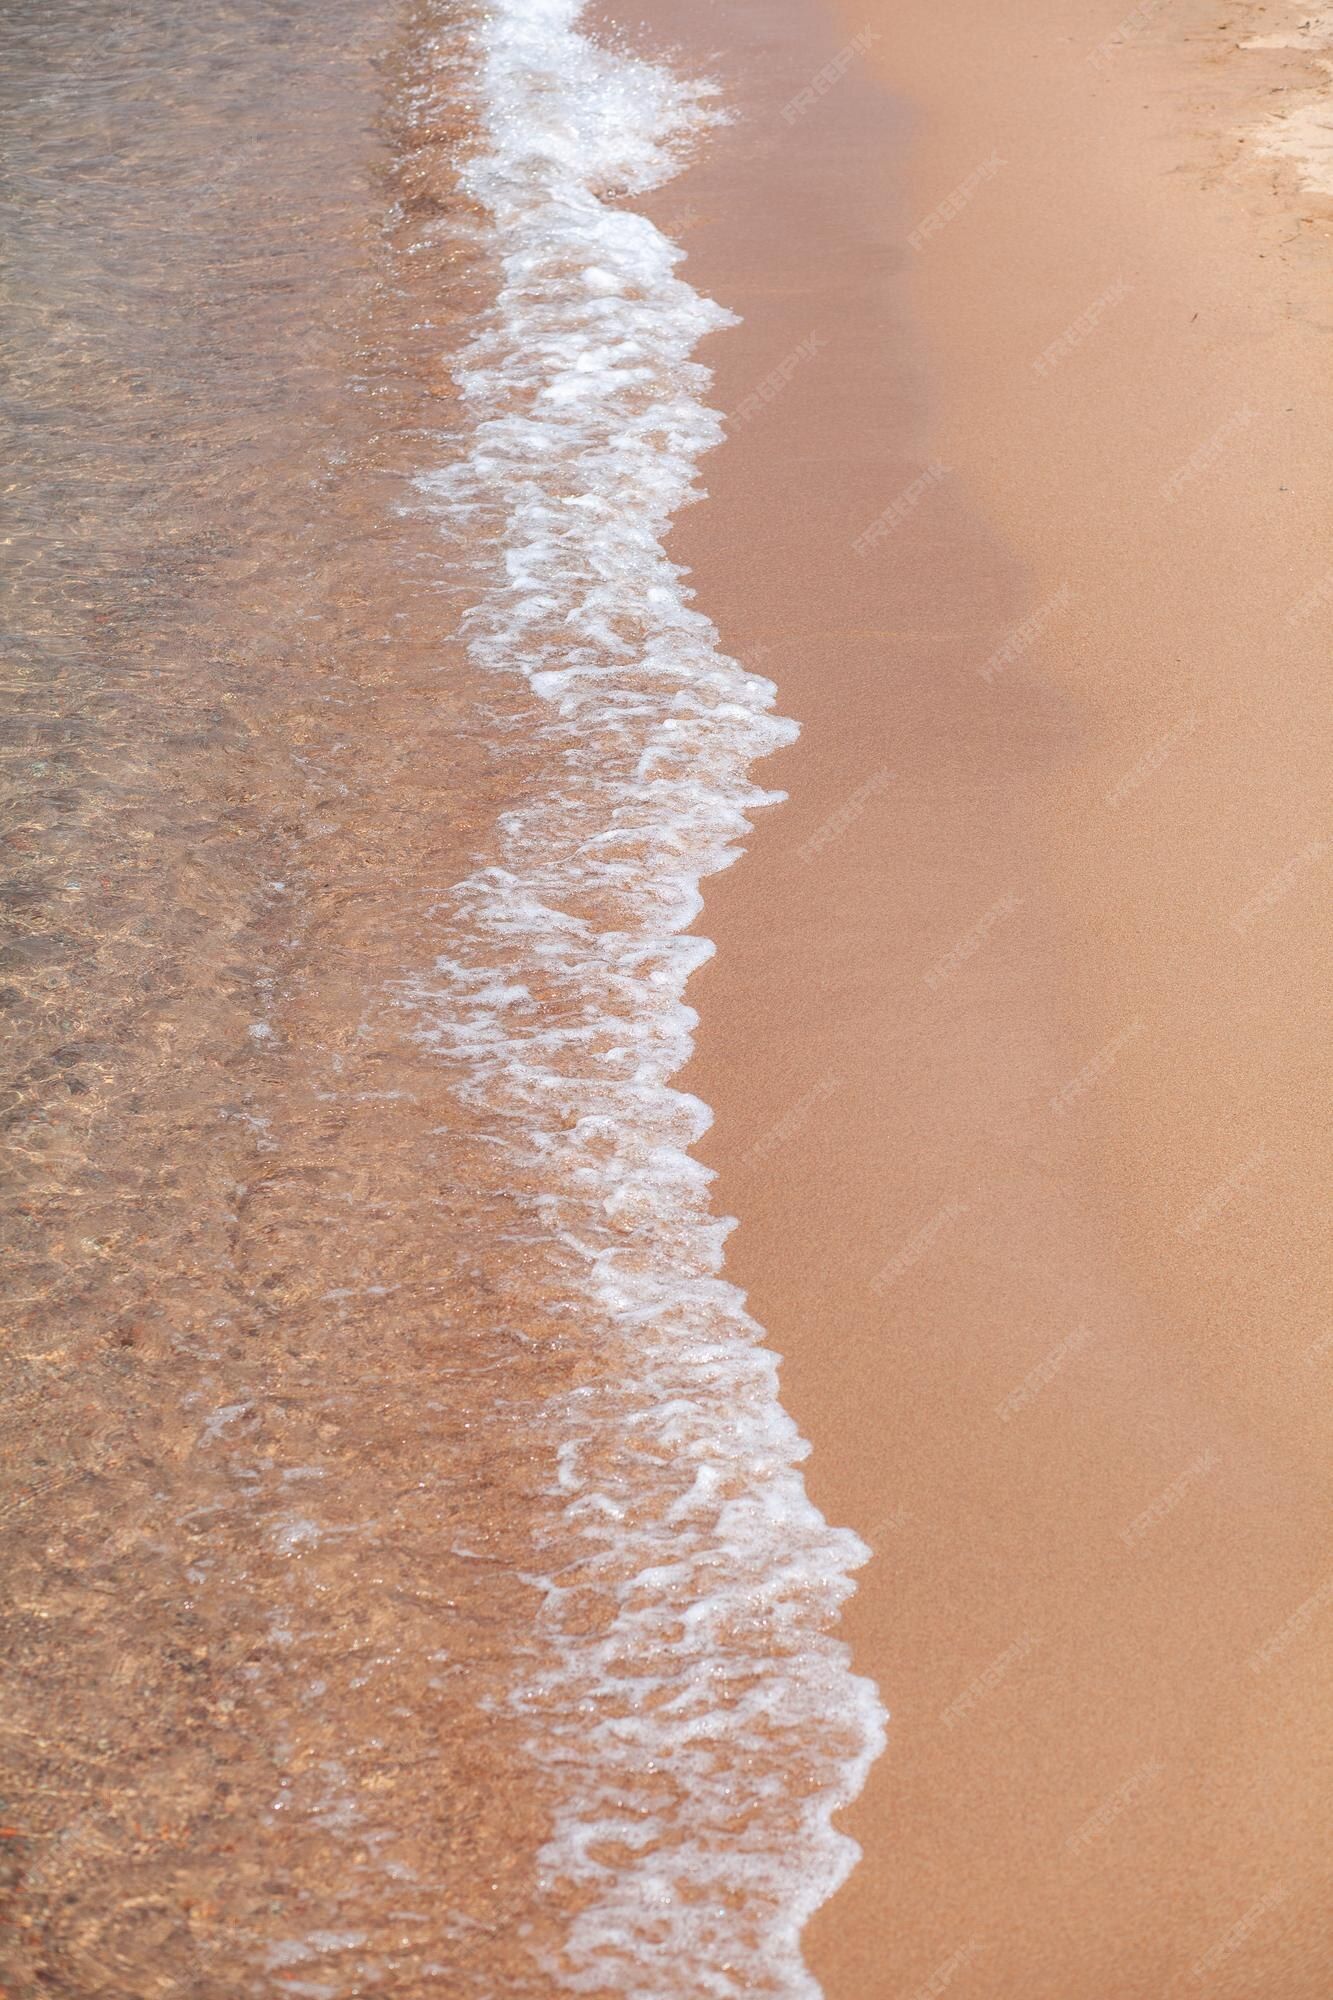 A soft wave runs on a sandy shore on a